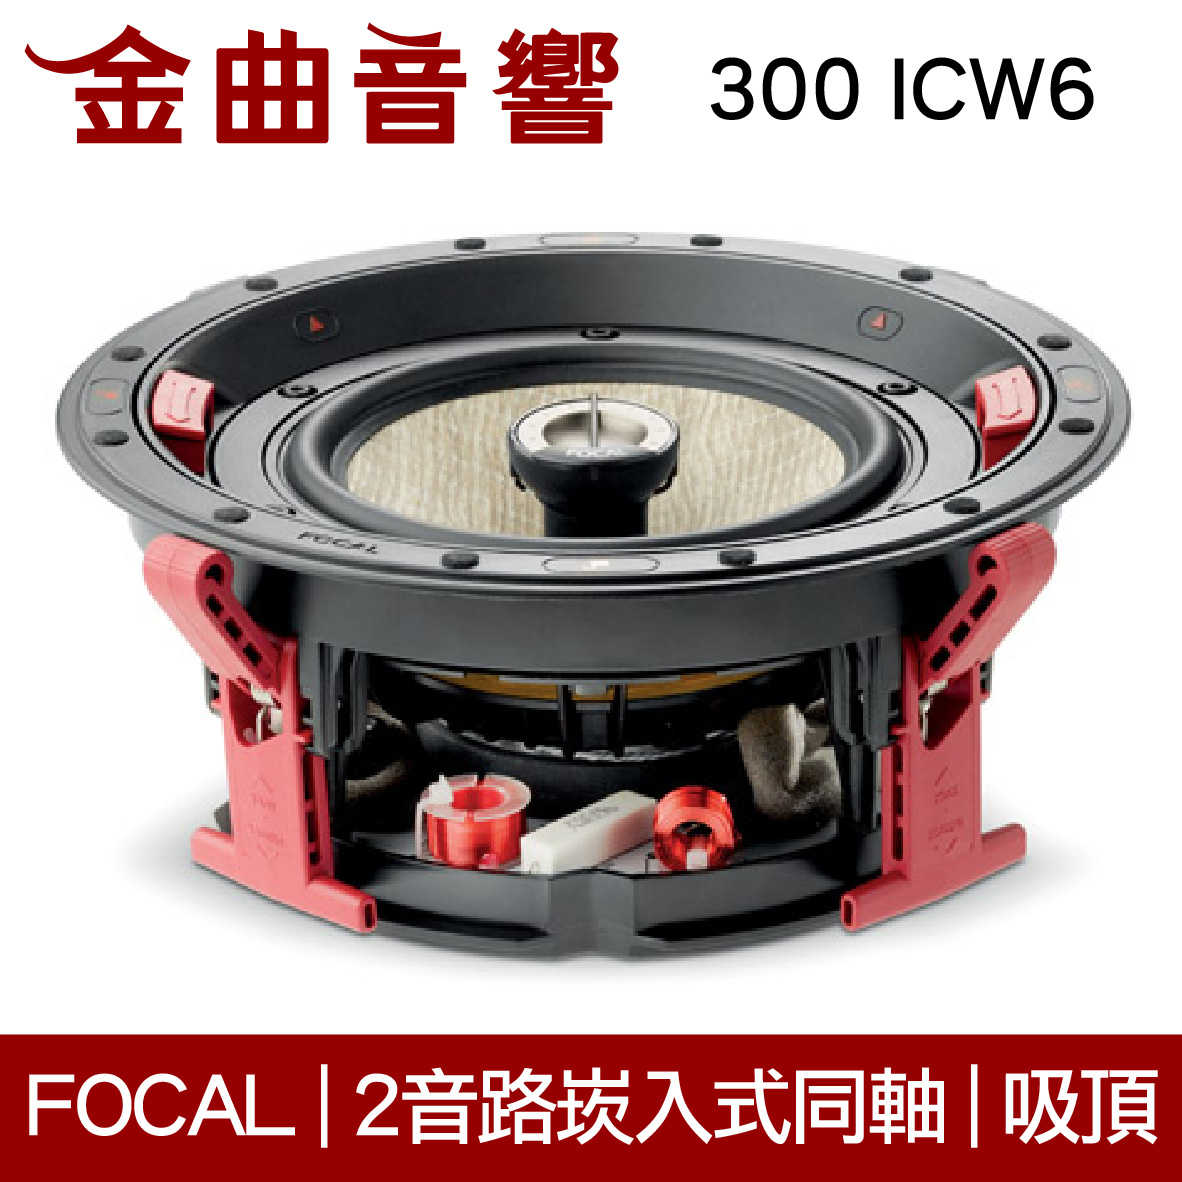 FOCAL 300 ICW6 崁入式 喇叭 吸頂喇叭 音響（單隻）| 金曲音響